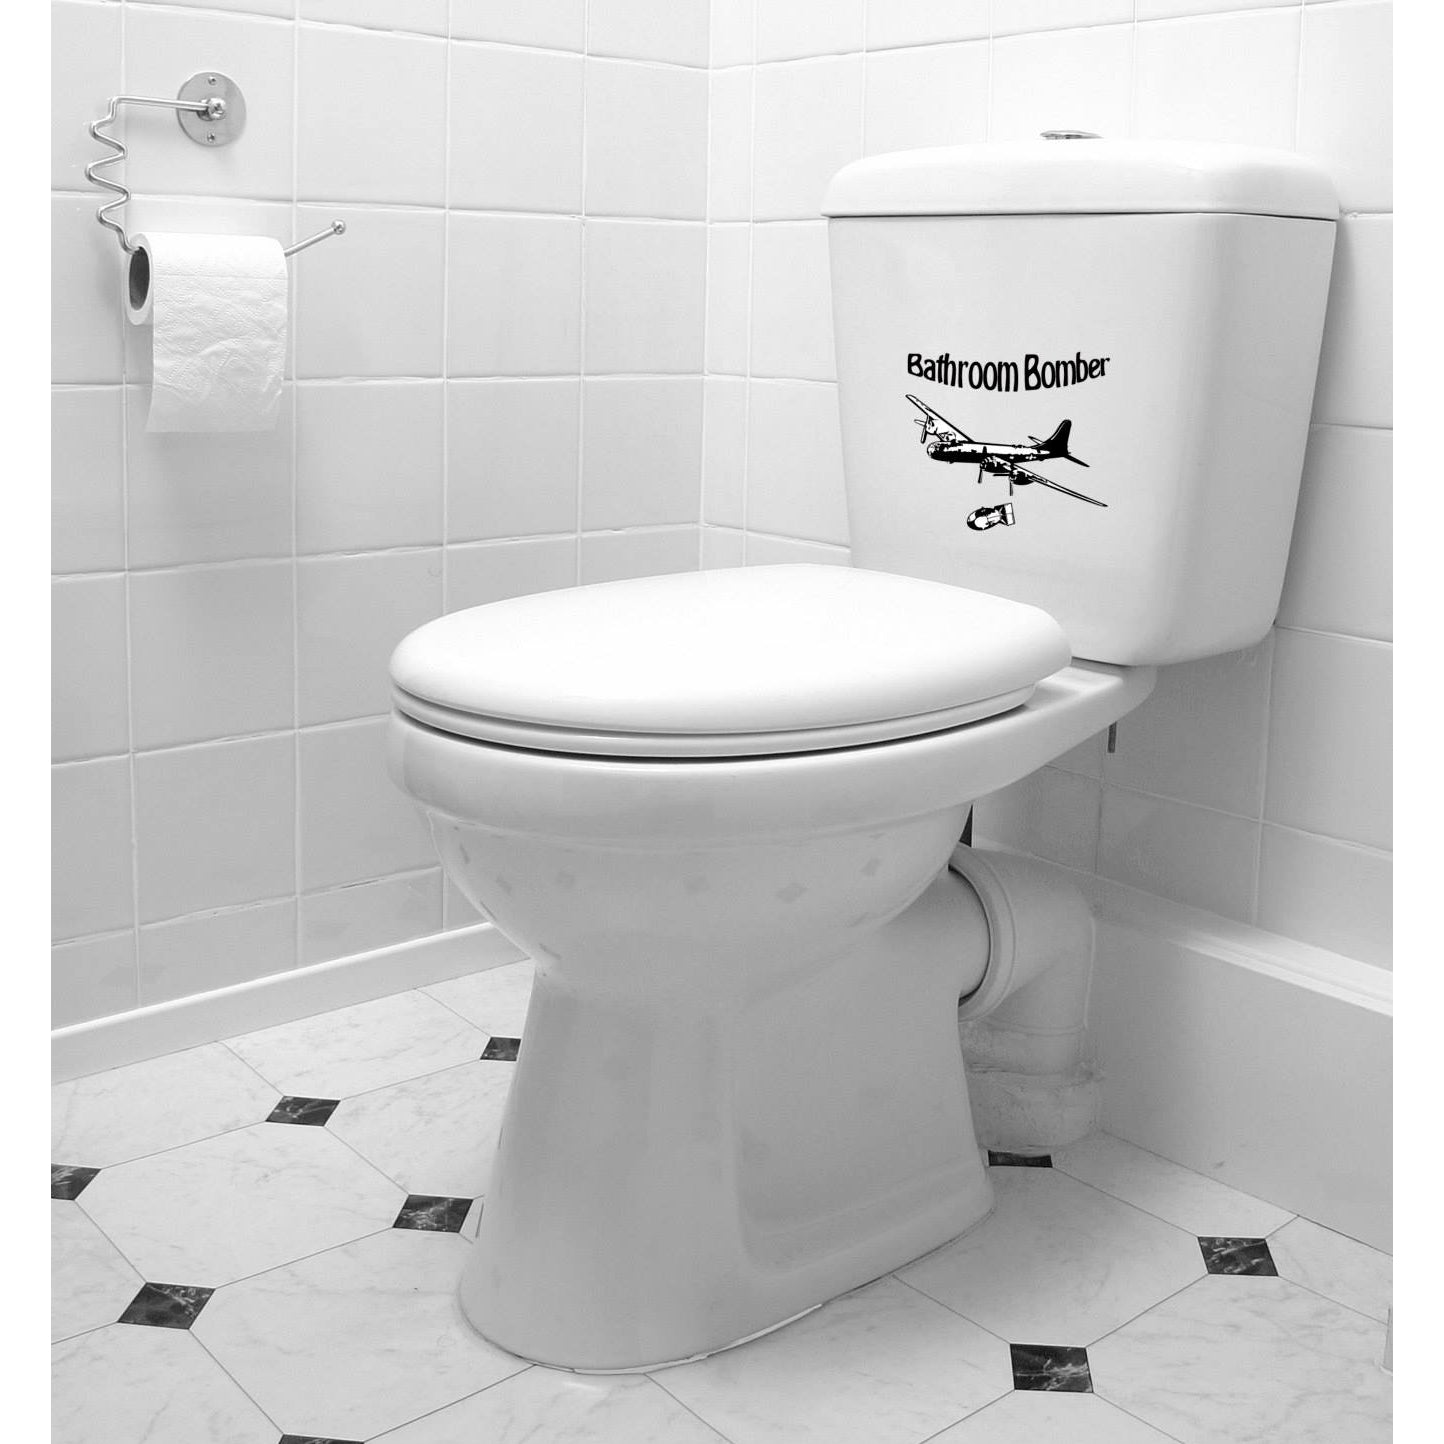 The Bathroom Bomber Novelty Toilet Bowl Sticker Set LIQUIDATION PRICING - PilotMall.com